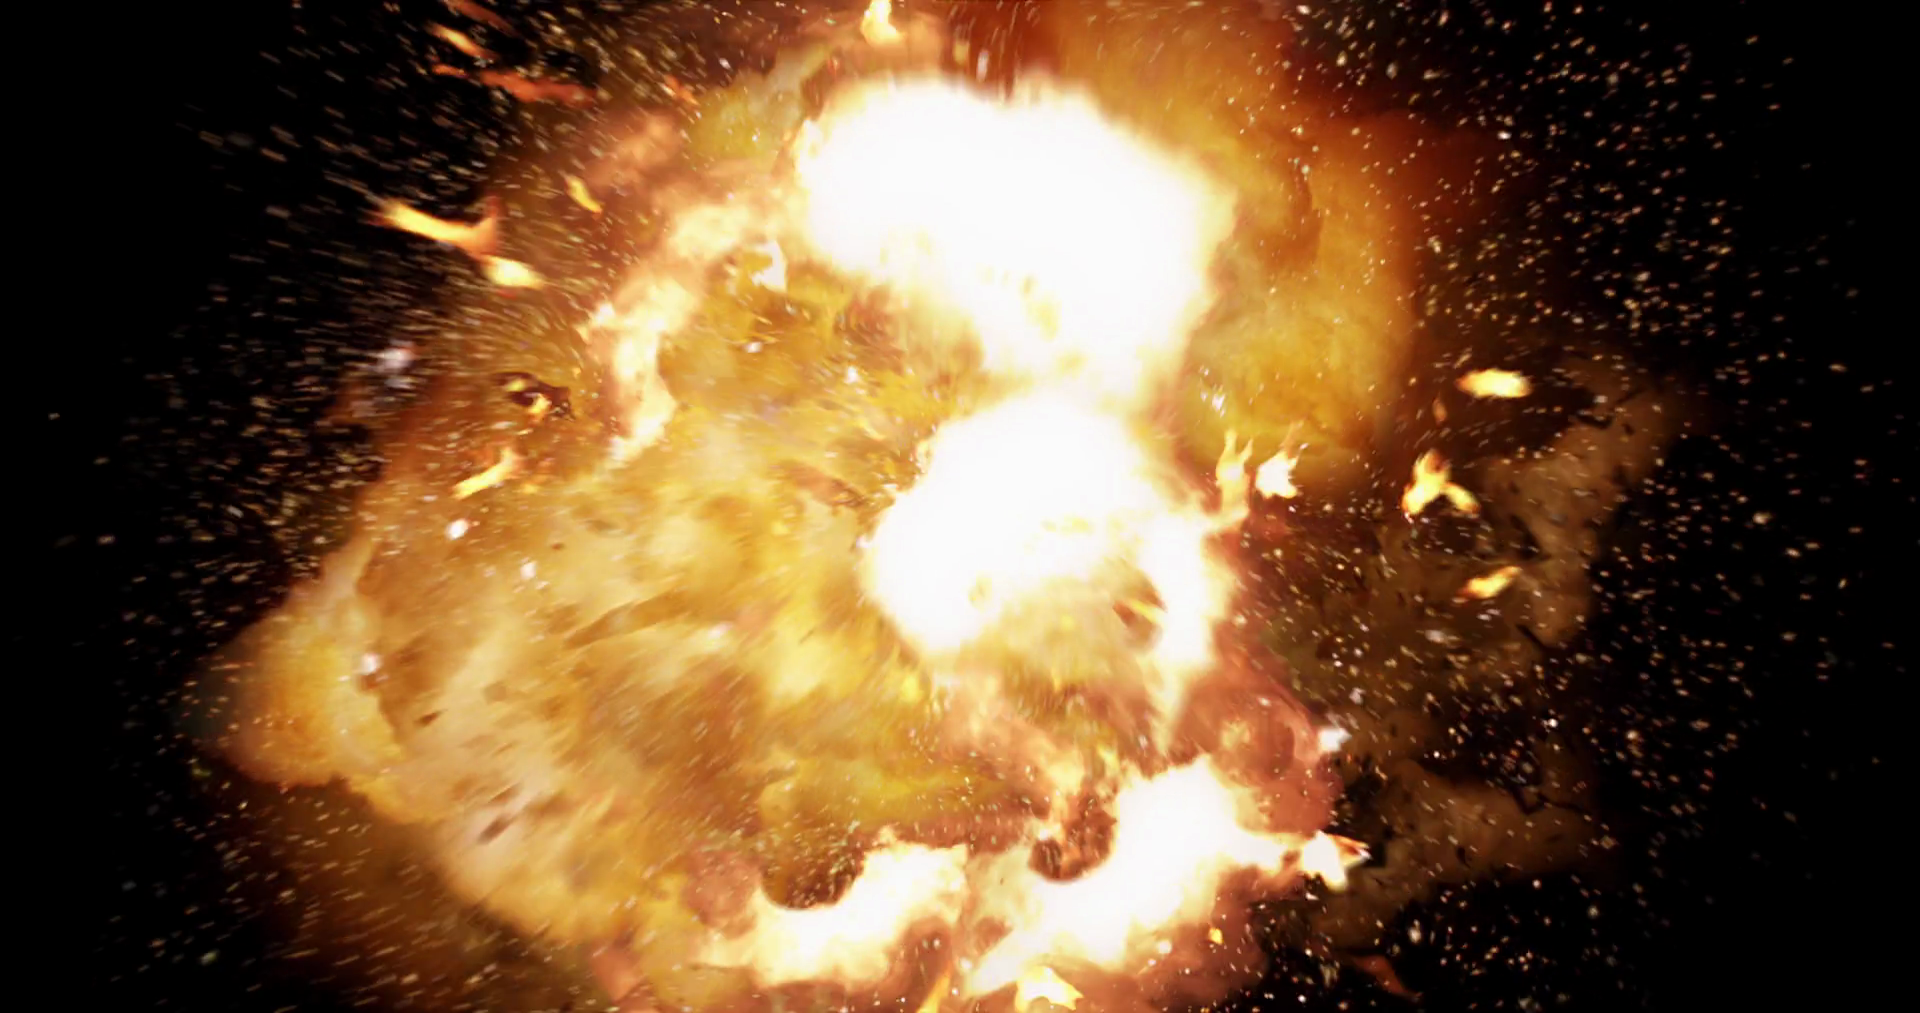 Bomb Blast - Explosion And Debris Sound Elements - Sound Effect